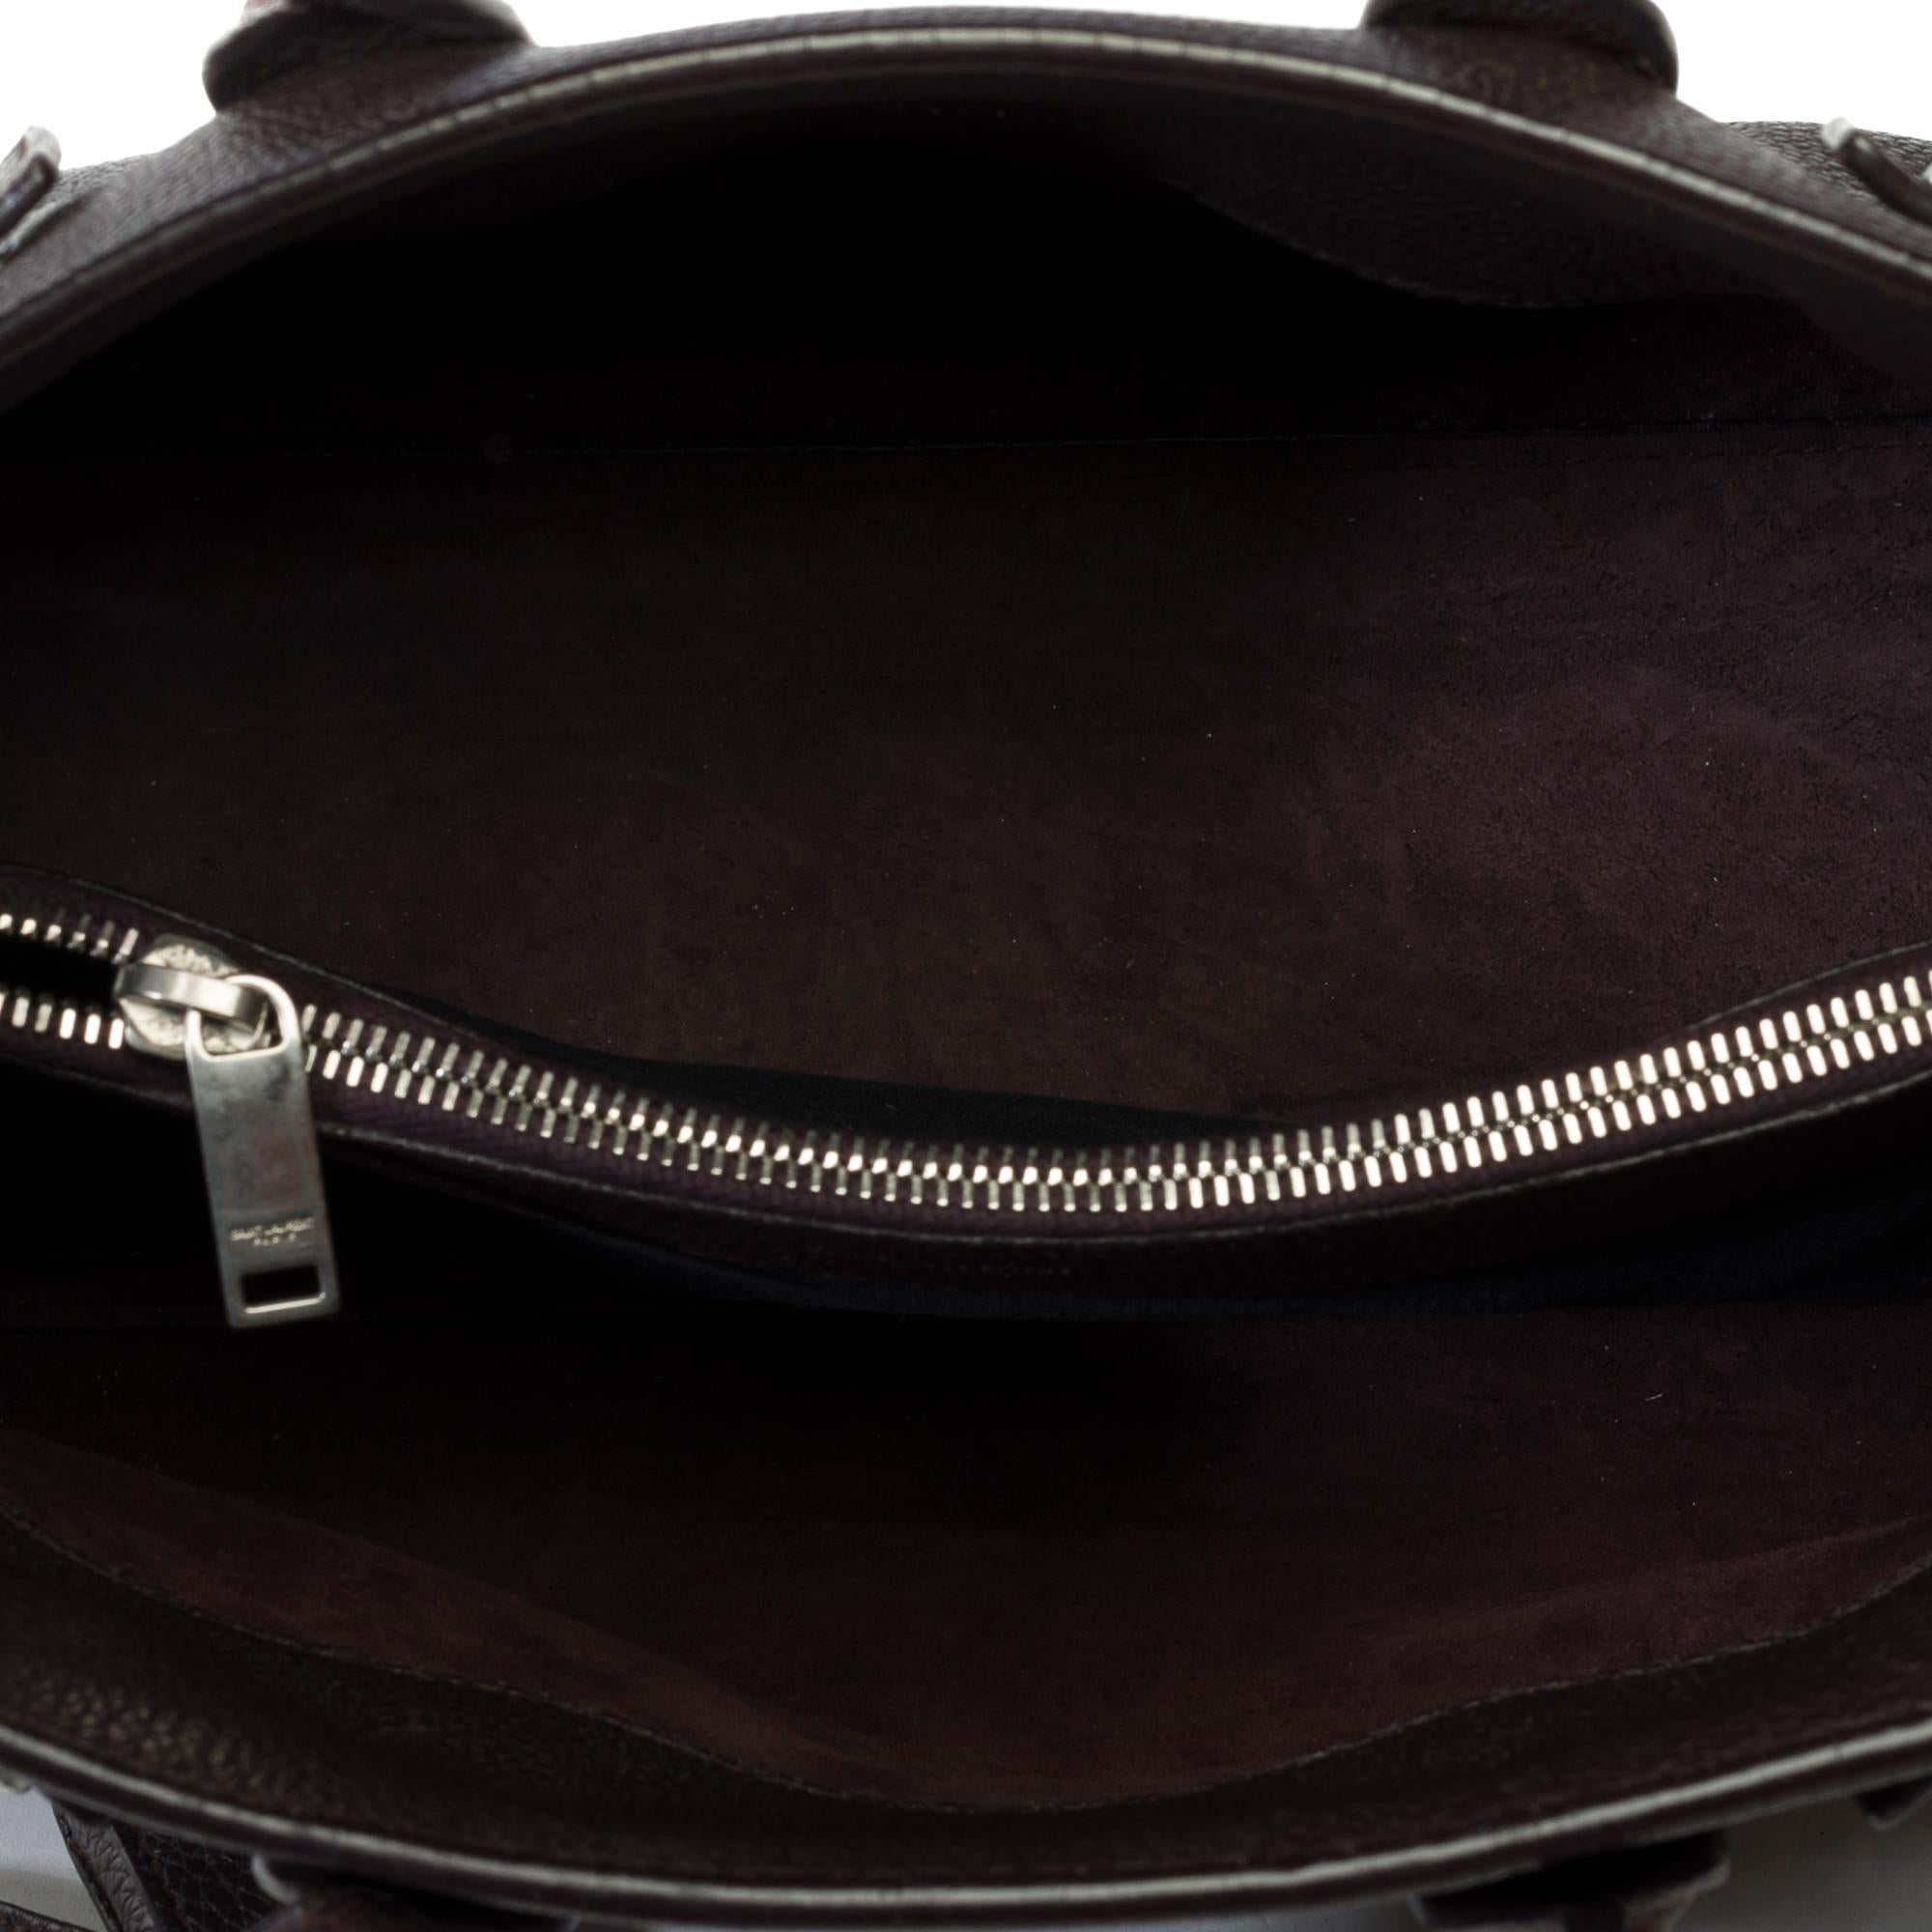 Saint Laurent Nano Sac de Jour handbag strap in burgundy grained leather, SHW For Sale 4